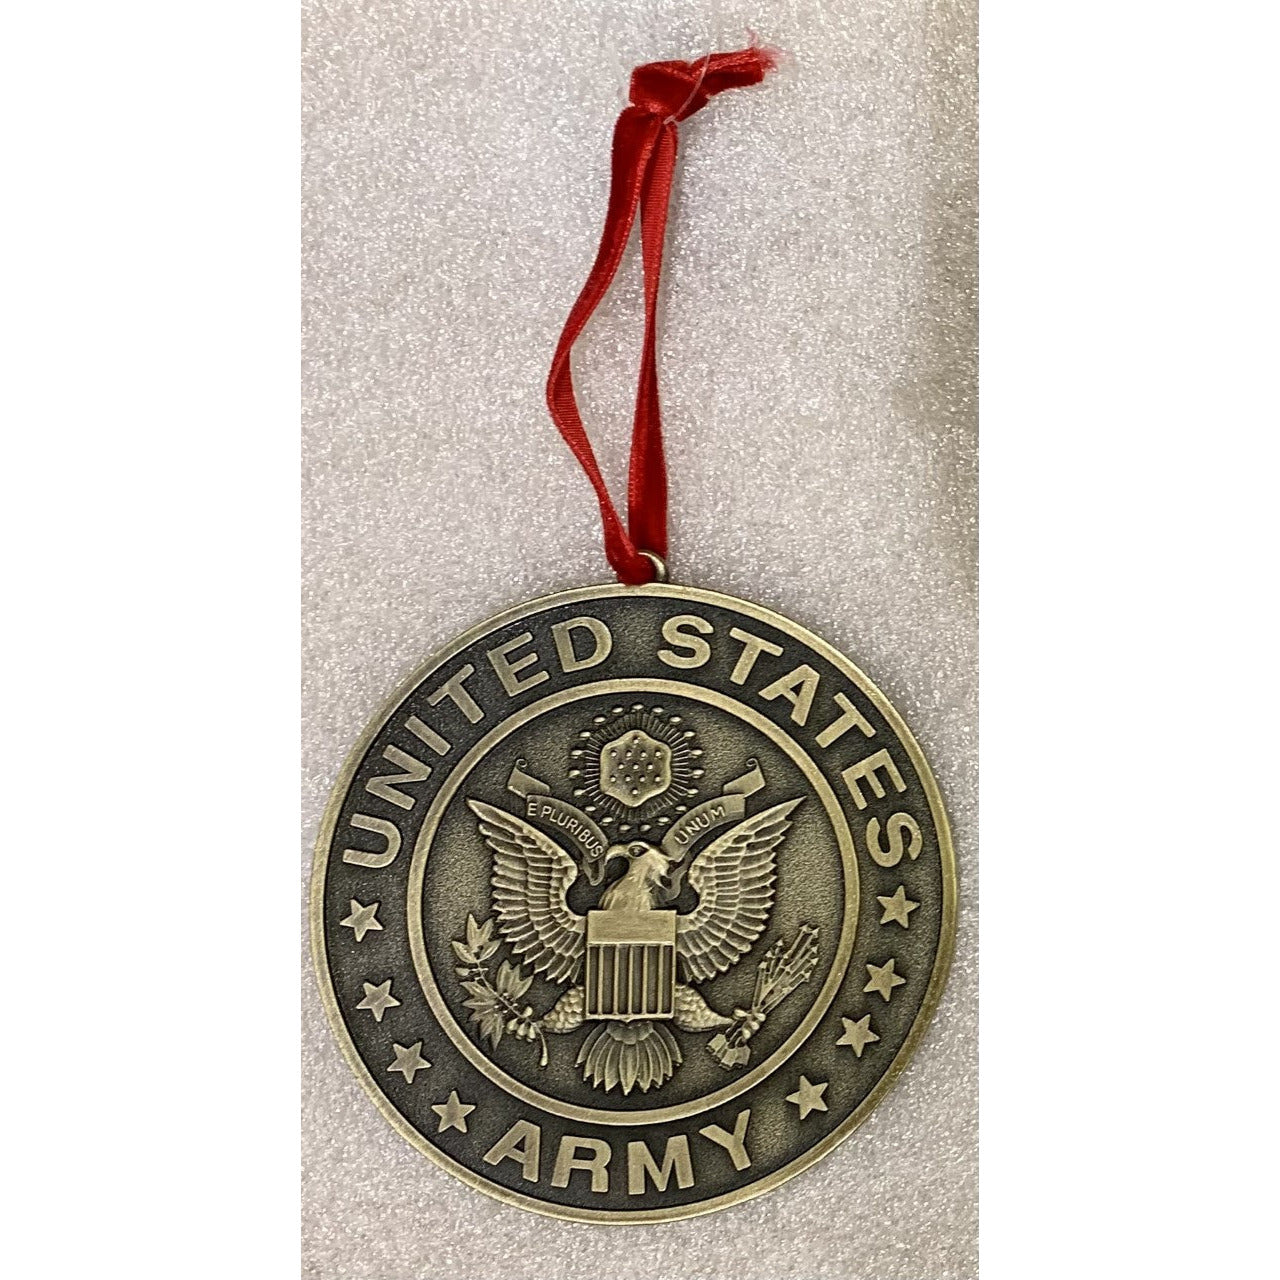 U.S. Army Metal Ornament